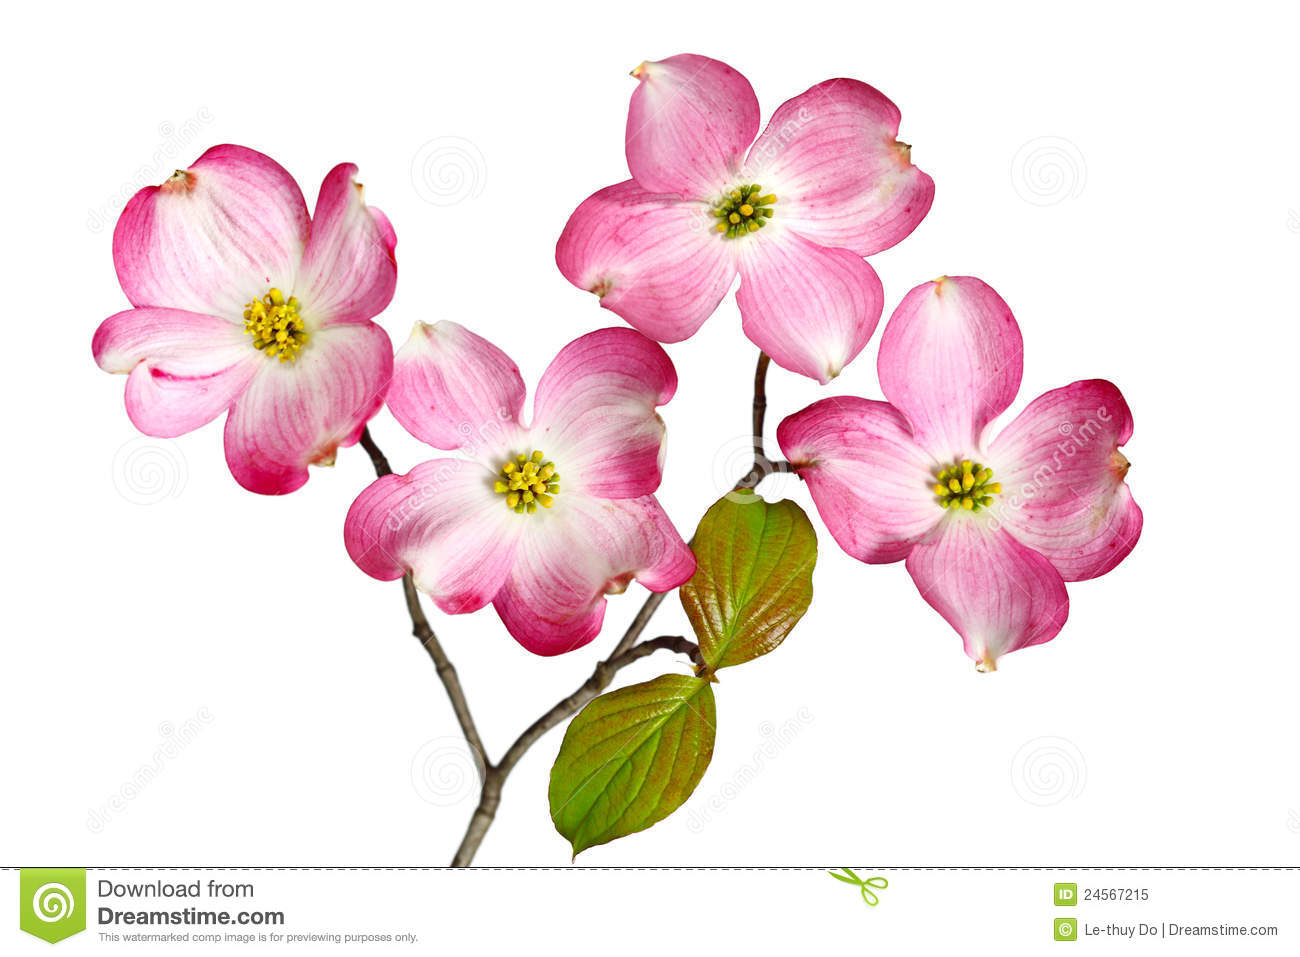 Red Dogwood Blossom Royalty Free Stock Photo   Image  24567215